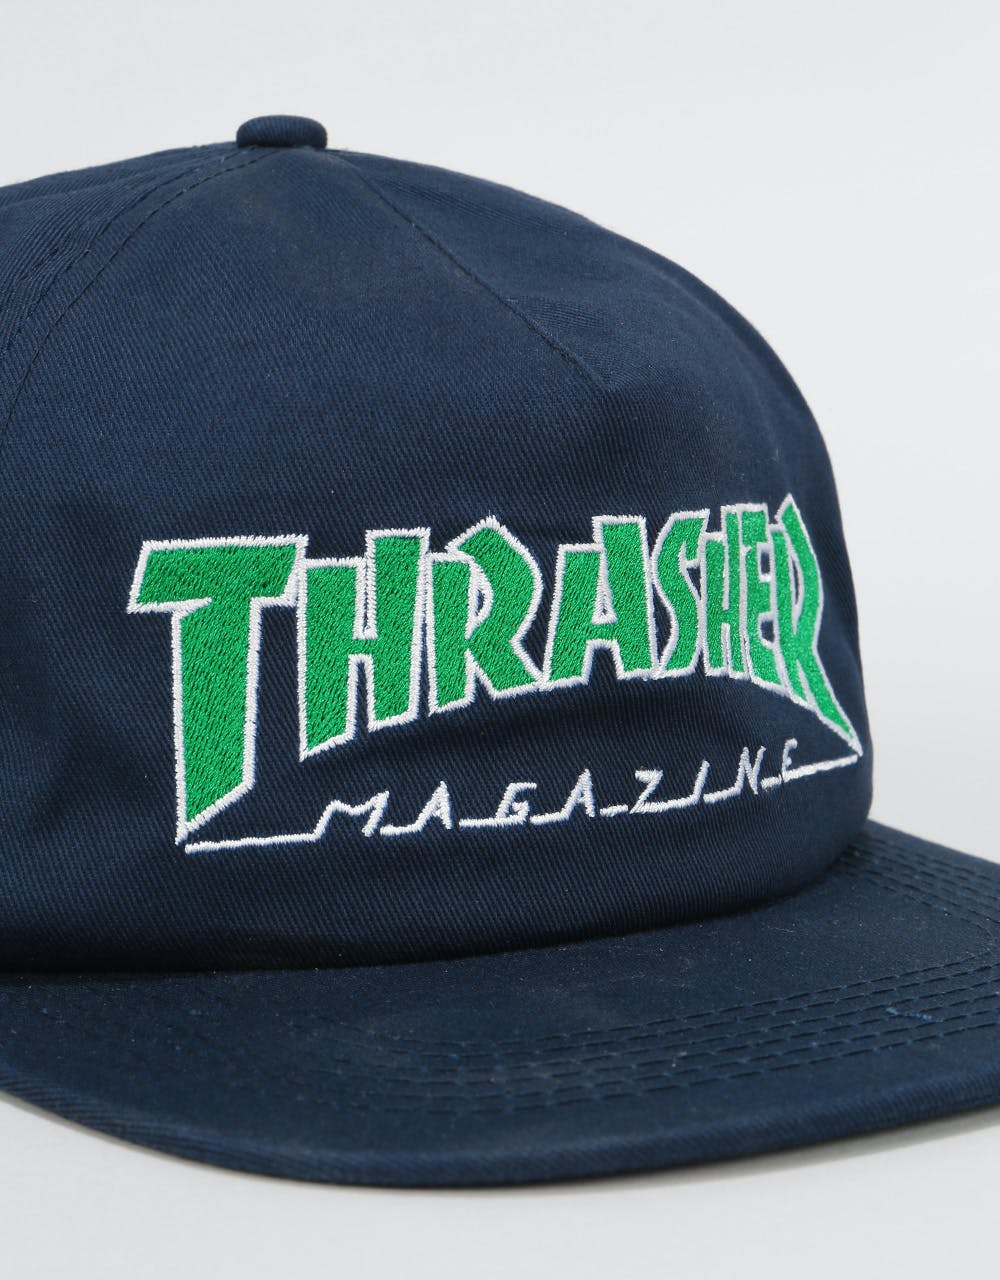 Thrasher Outlined Snapback Cap - Navy